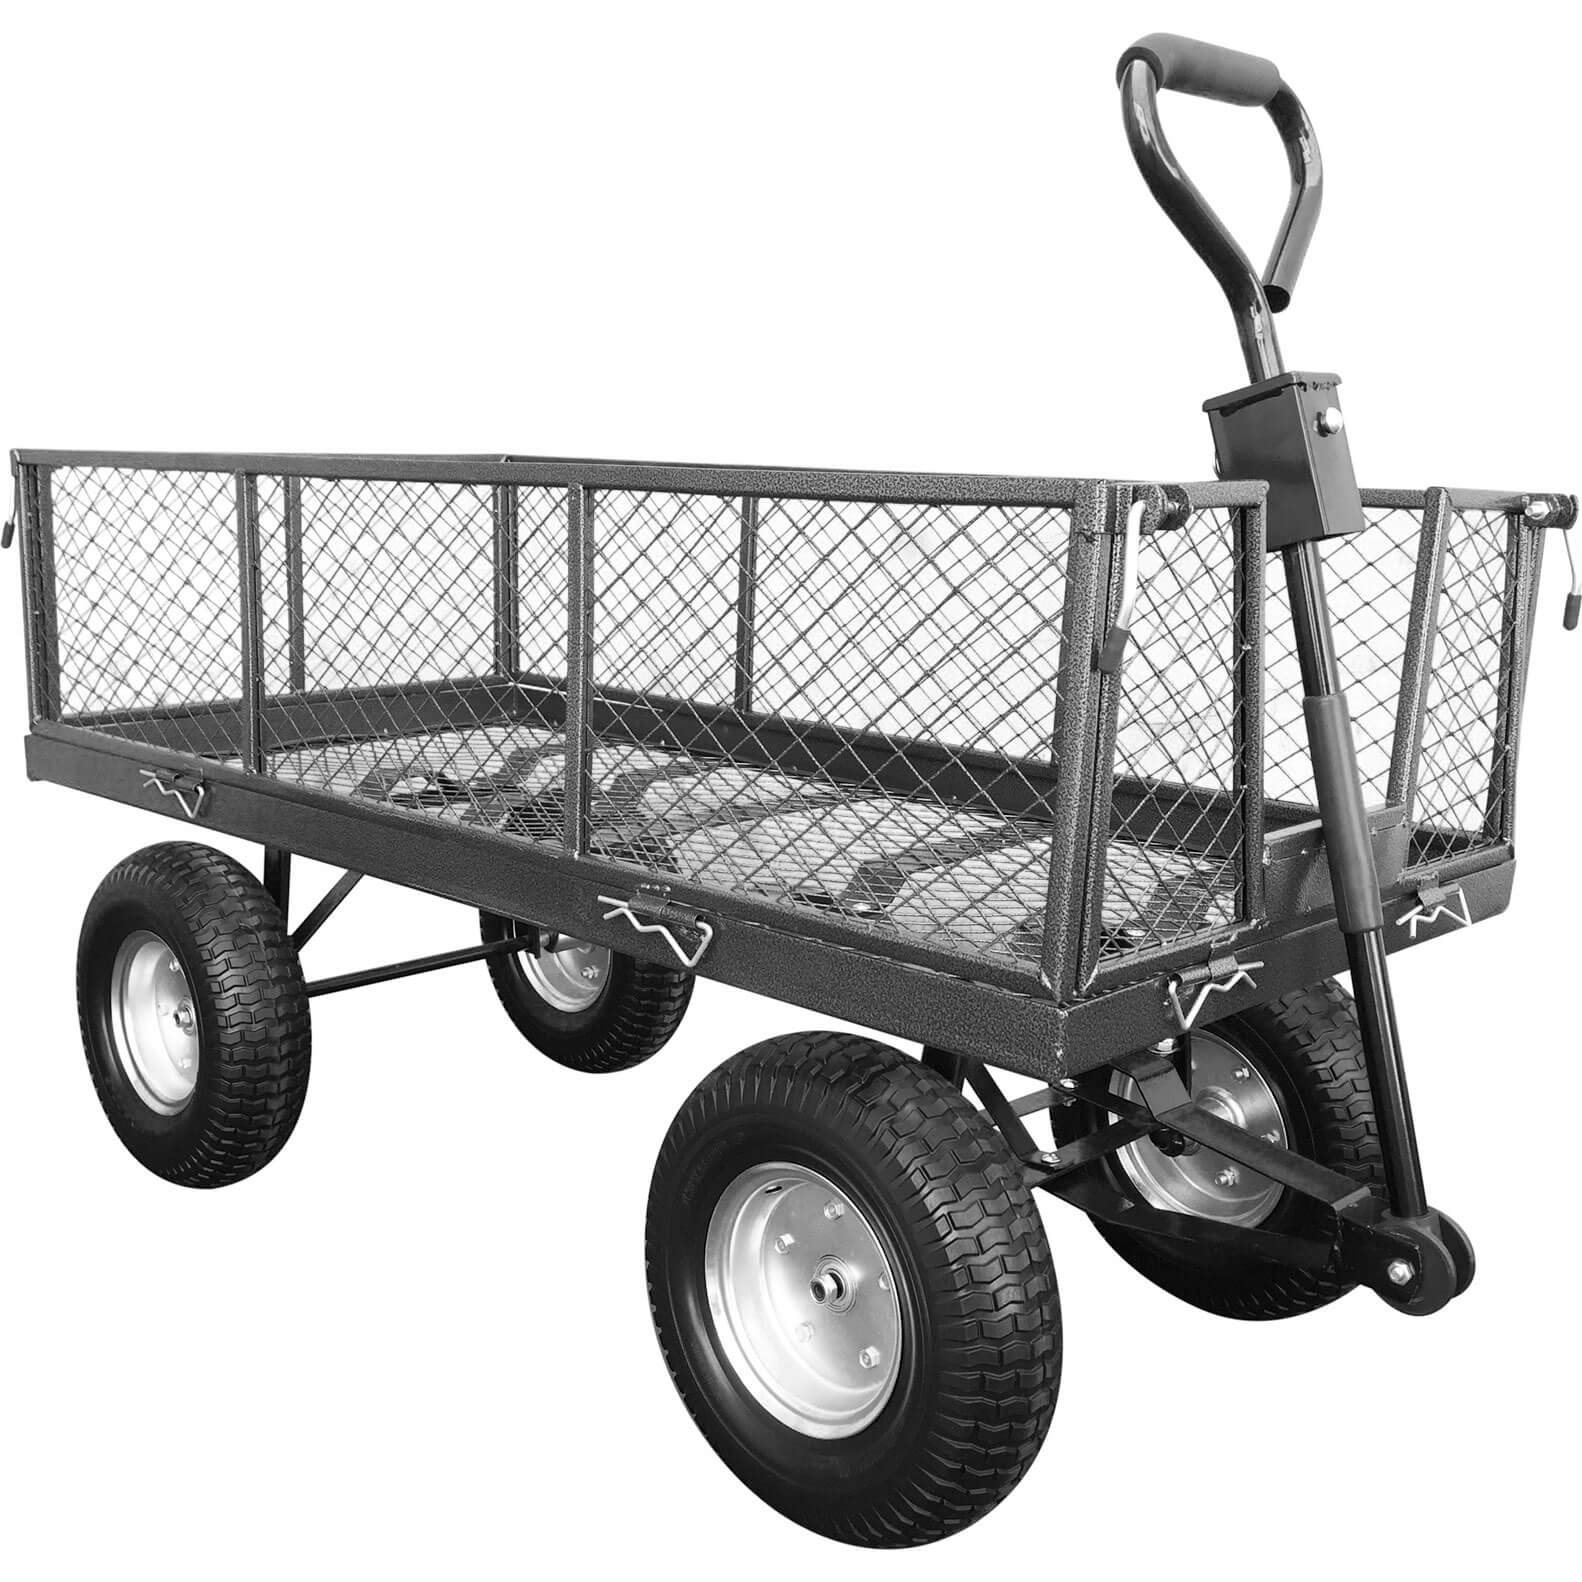 Handy THLGT Large Steel Garden Trolley with Punctureless Wheels 350kg